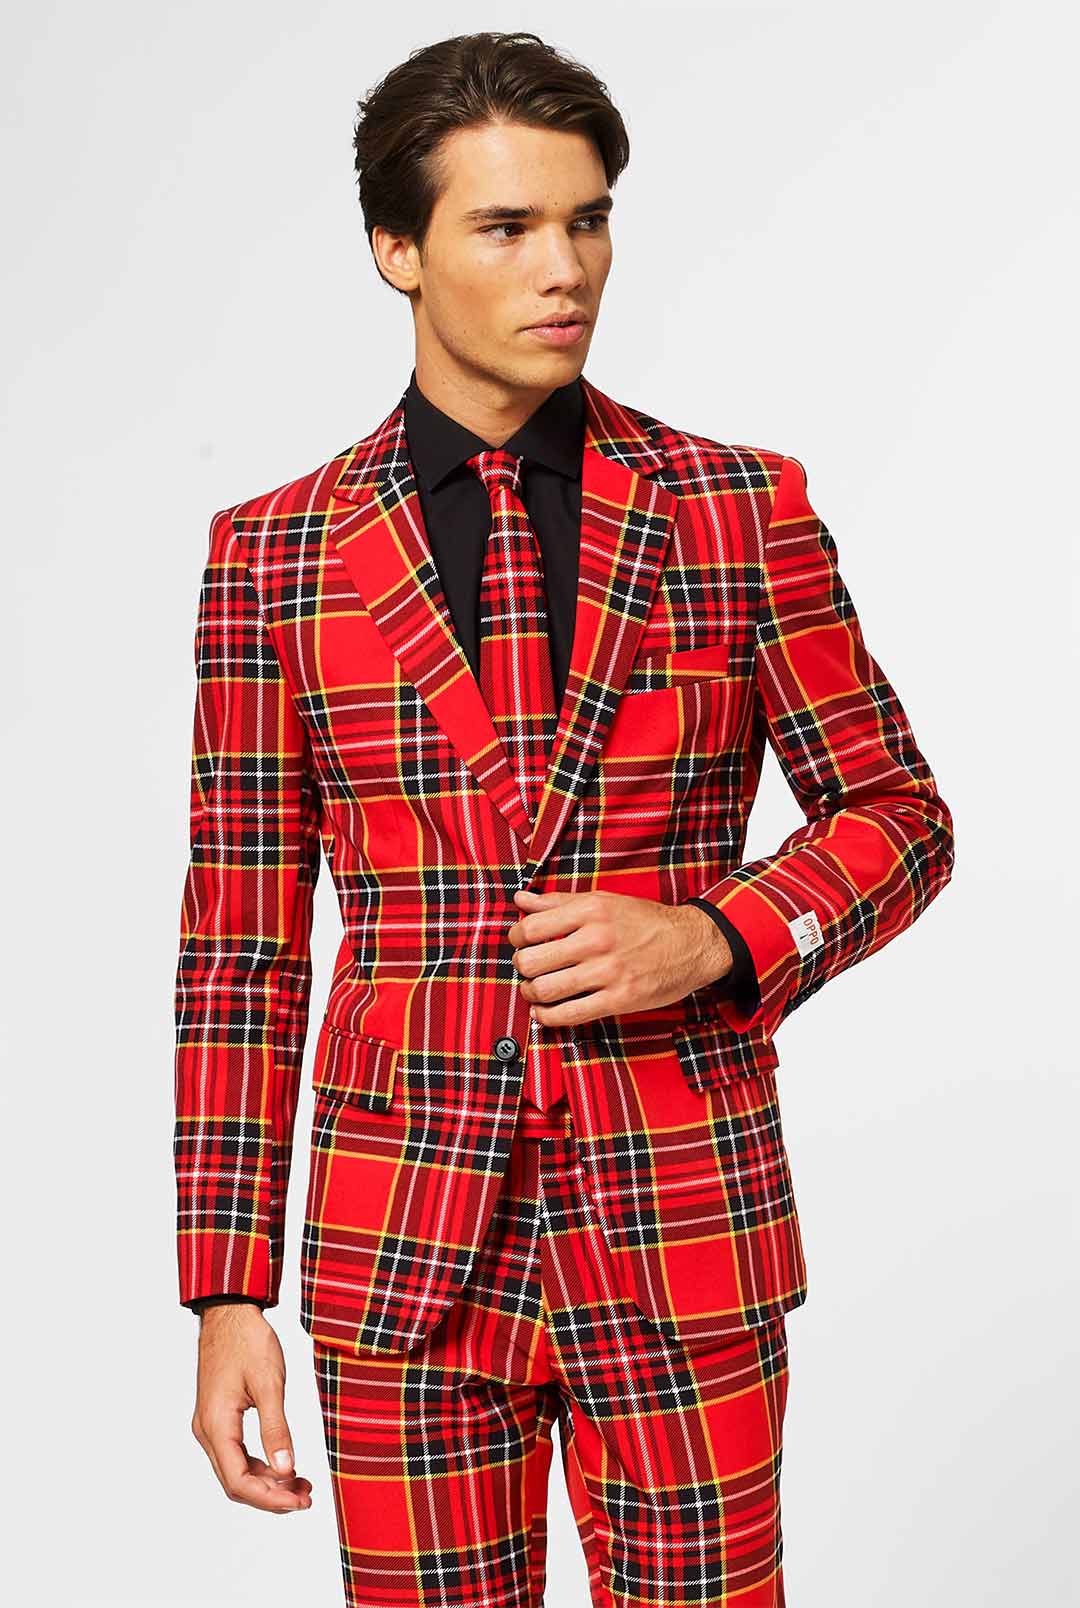 The Lumberjack, Men's Tartan Suit, Christmas Suit